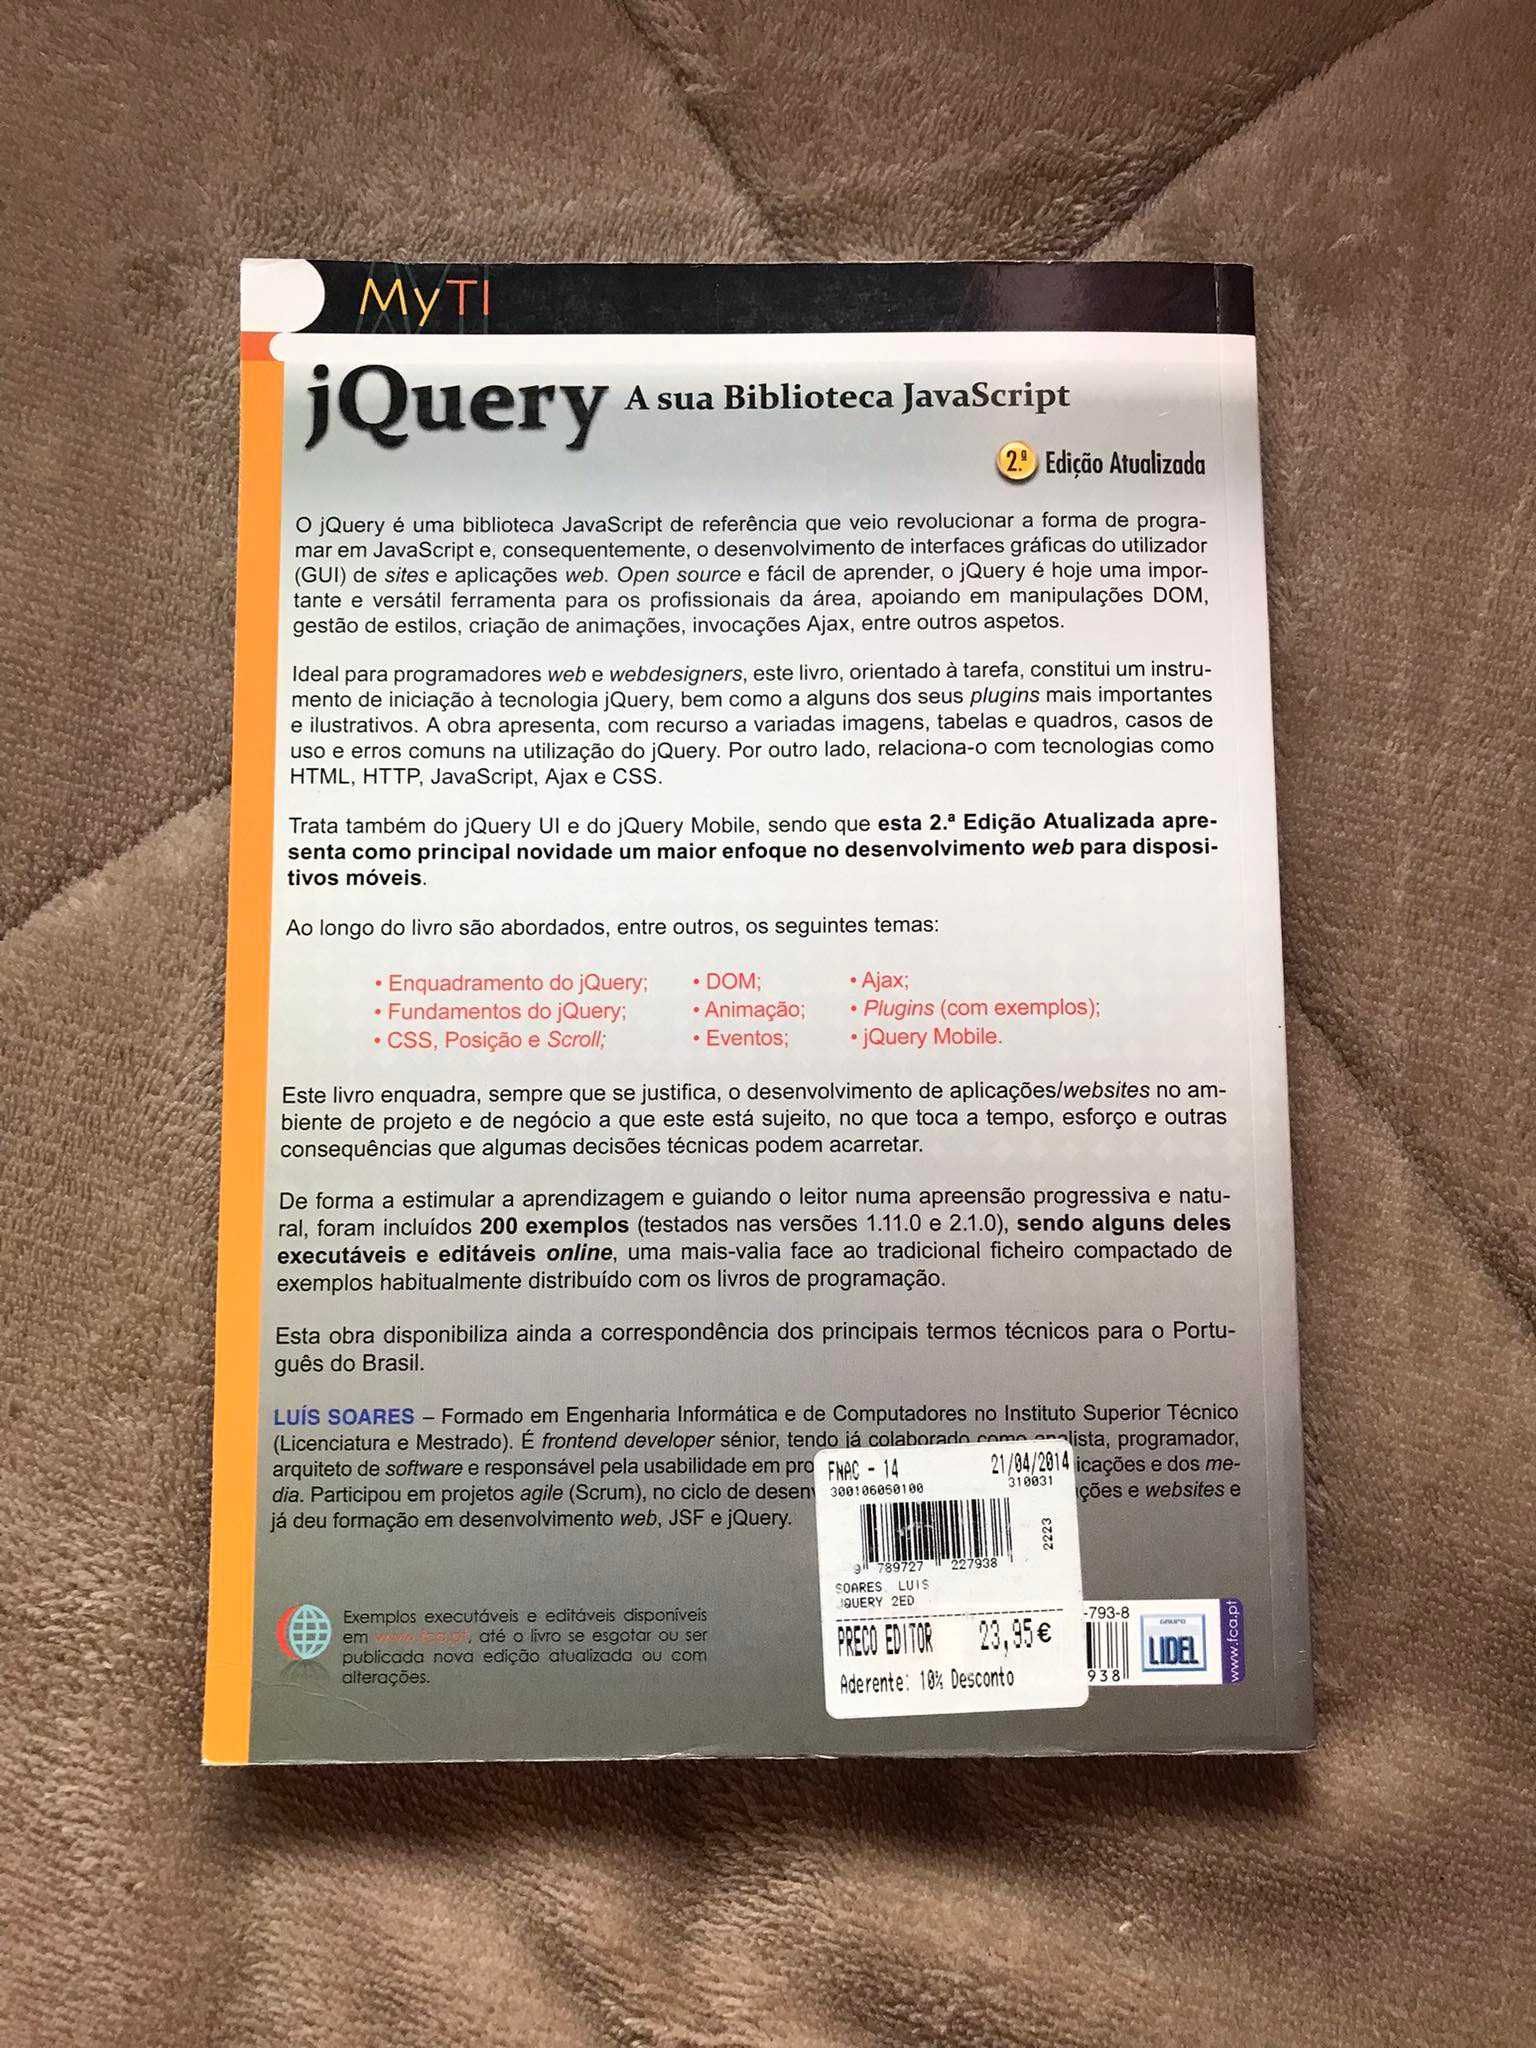 jQuery - A Sua Biblioteca JavaScript (My TI)